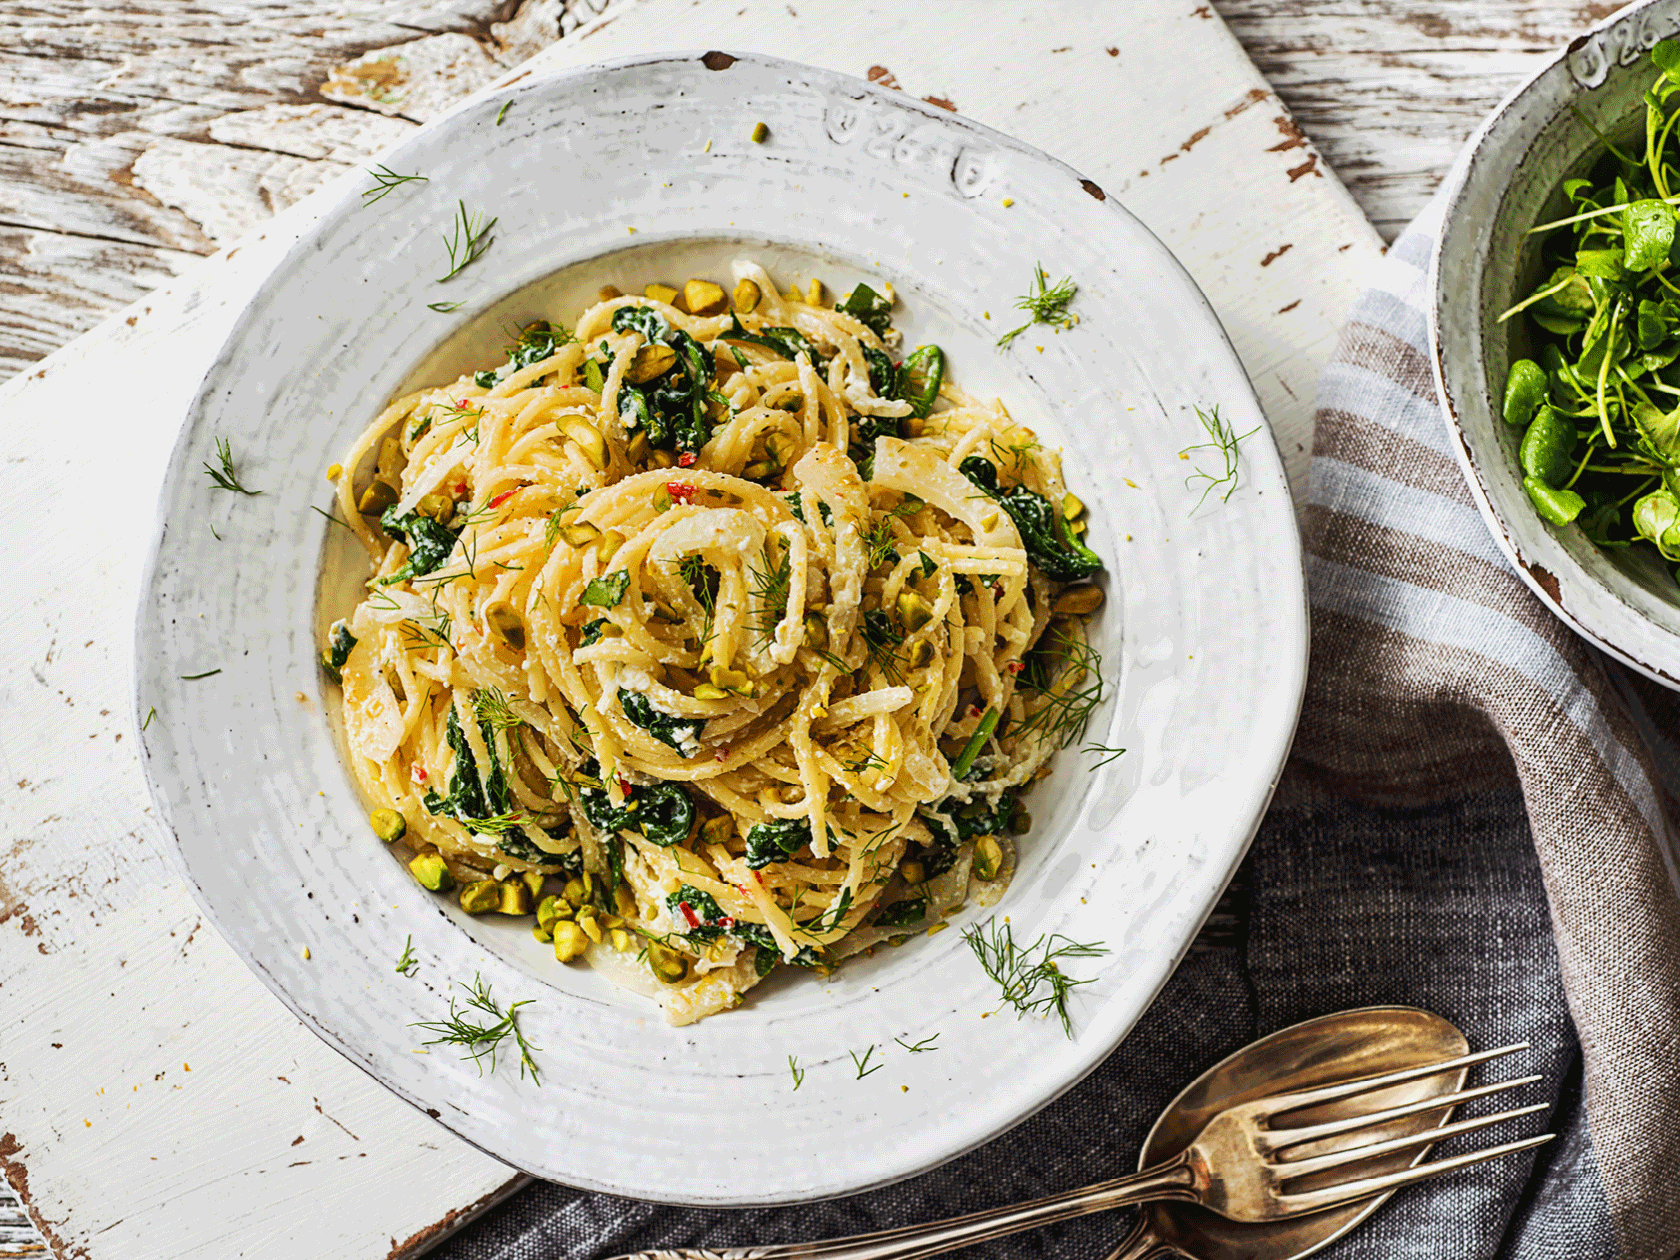 This ricotta pasta is a filling twist on TikTok's lemon spaghetti